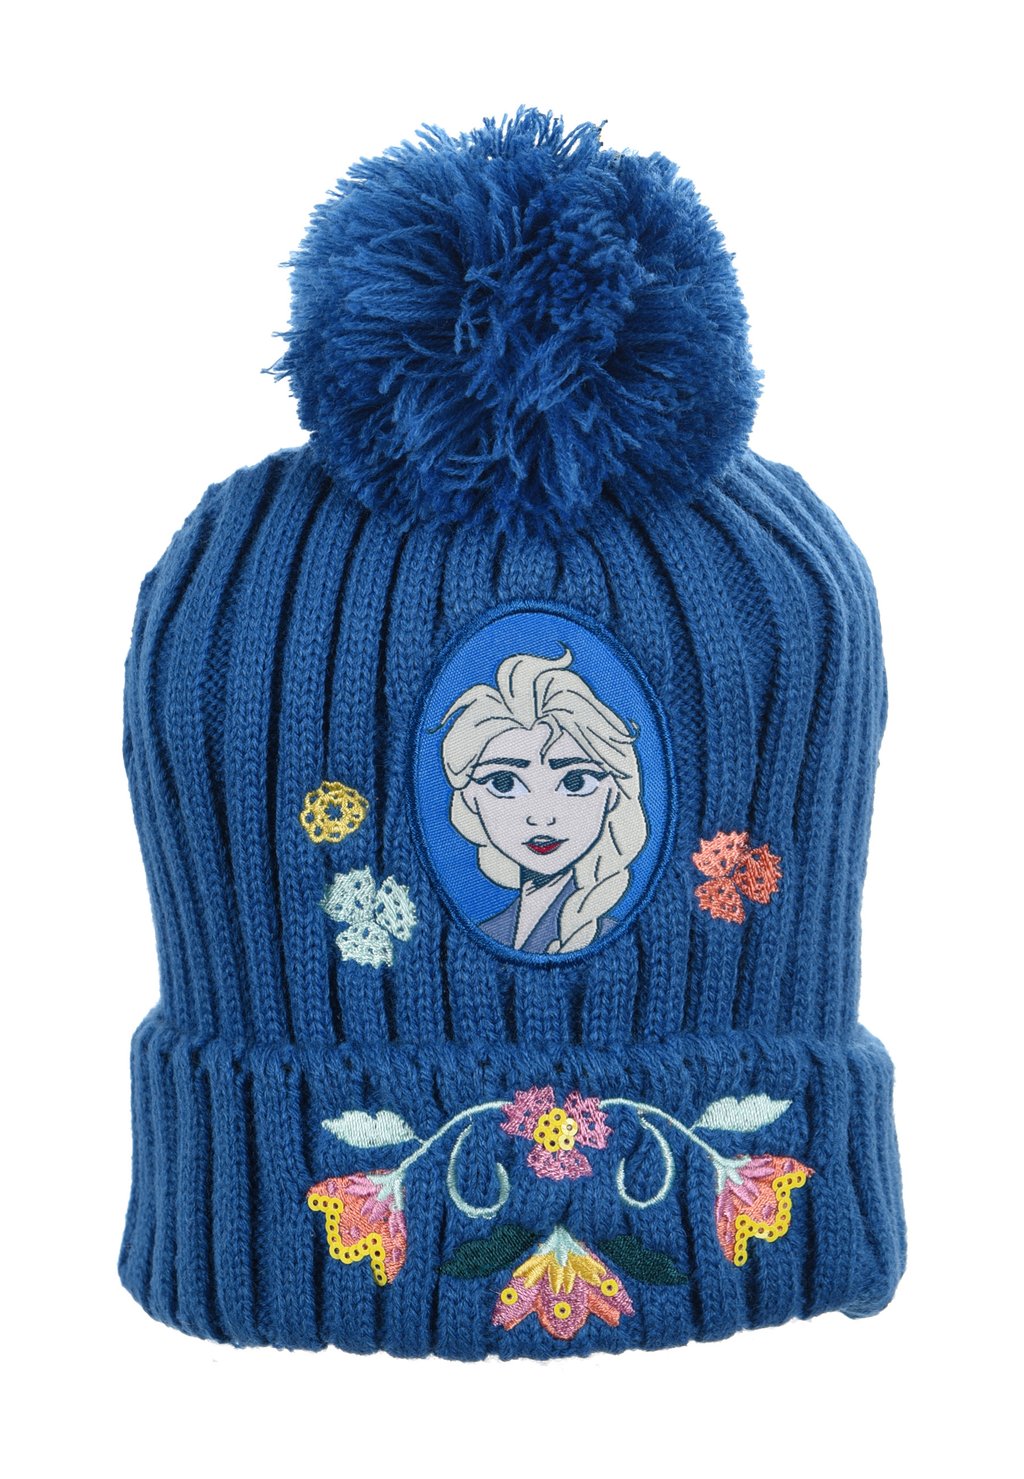 Шапка ELSA WINTER Disney FROZEN, цвет blau шапка elsa winter disney frozen цвет blau